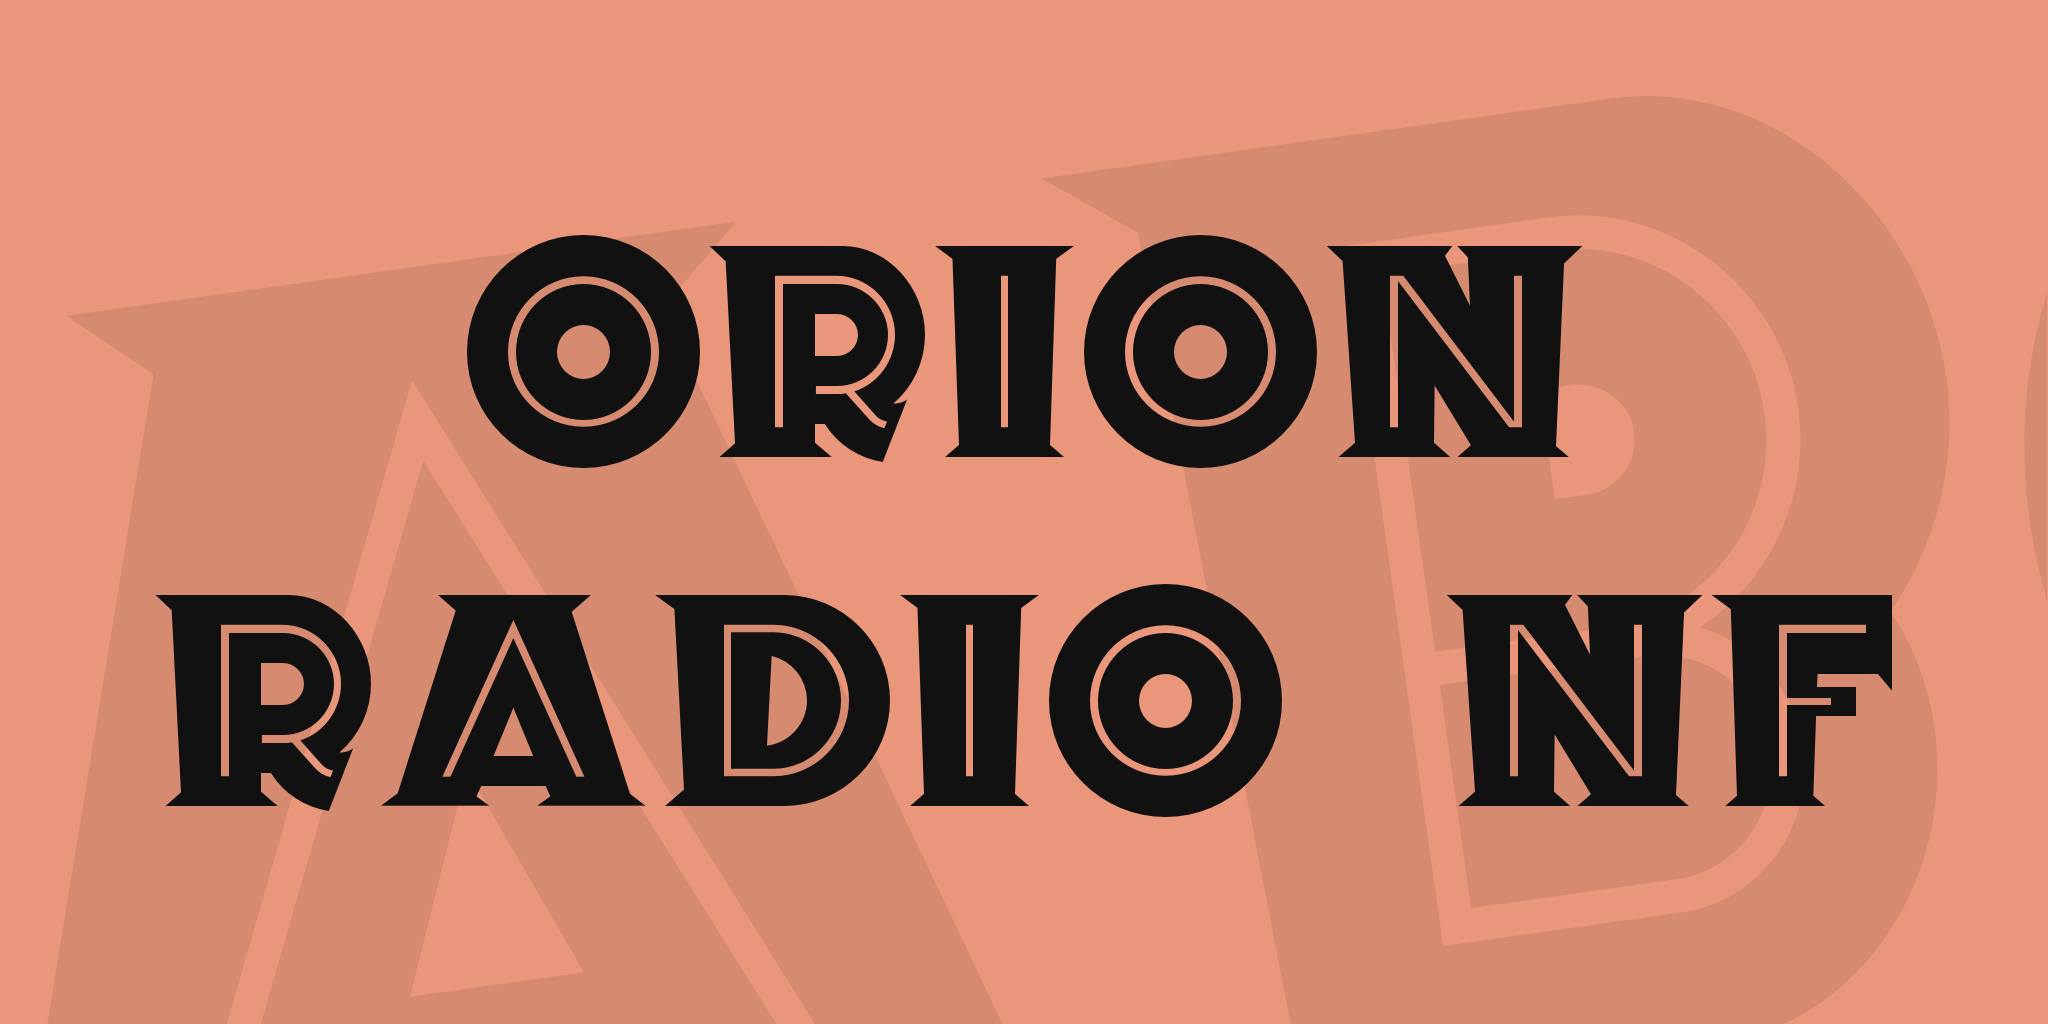 Orion Radio Nf